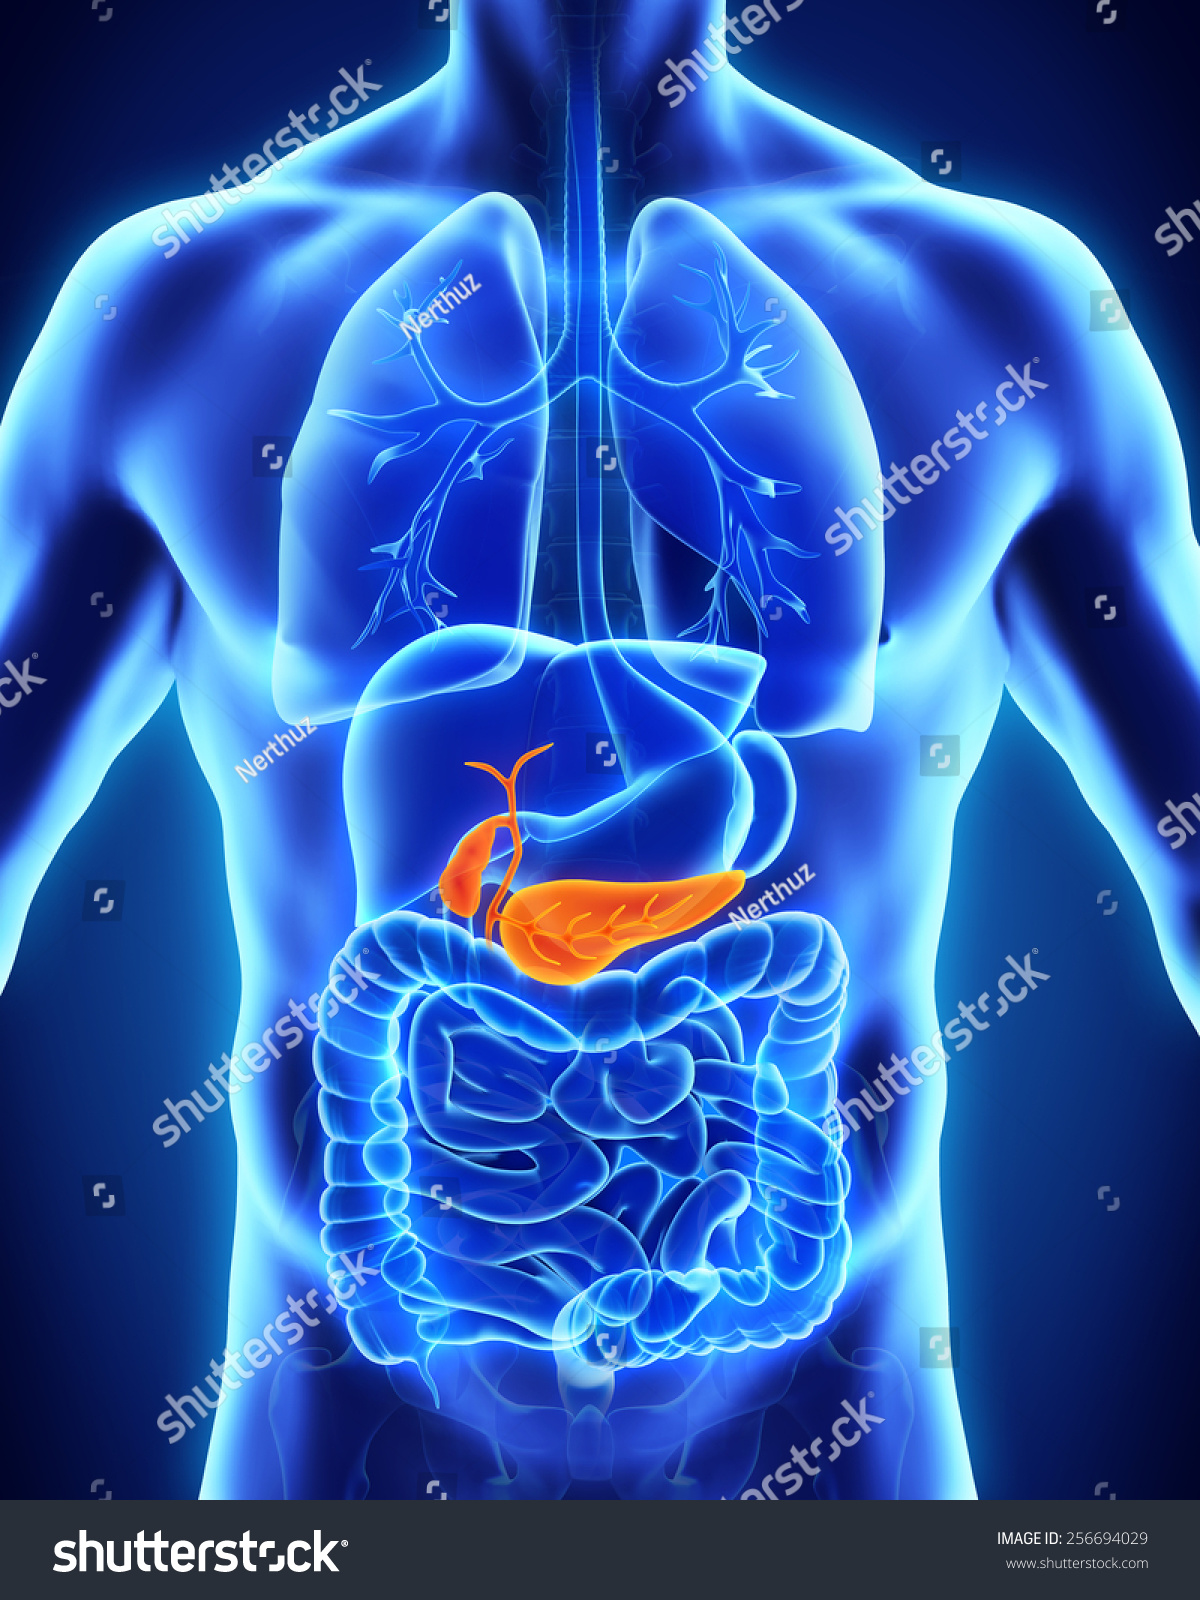 Human Gallbladder And Pancreas Anatomy Stock Photo 256694029 : Shutterstock